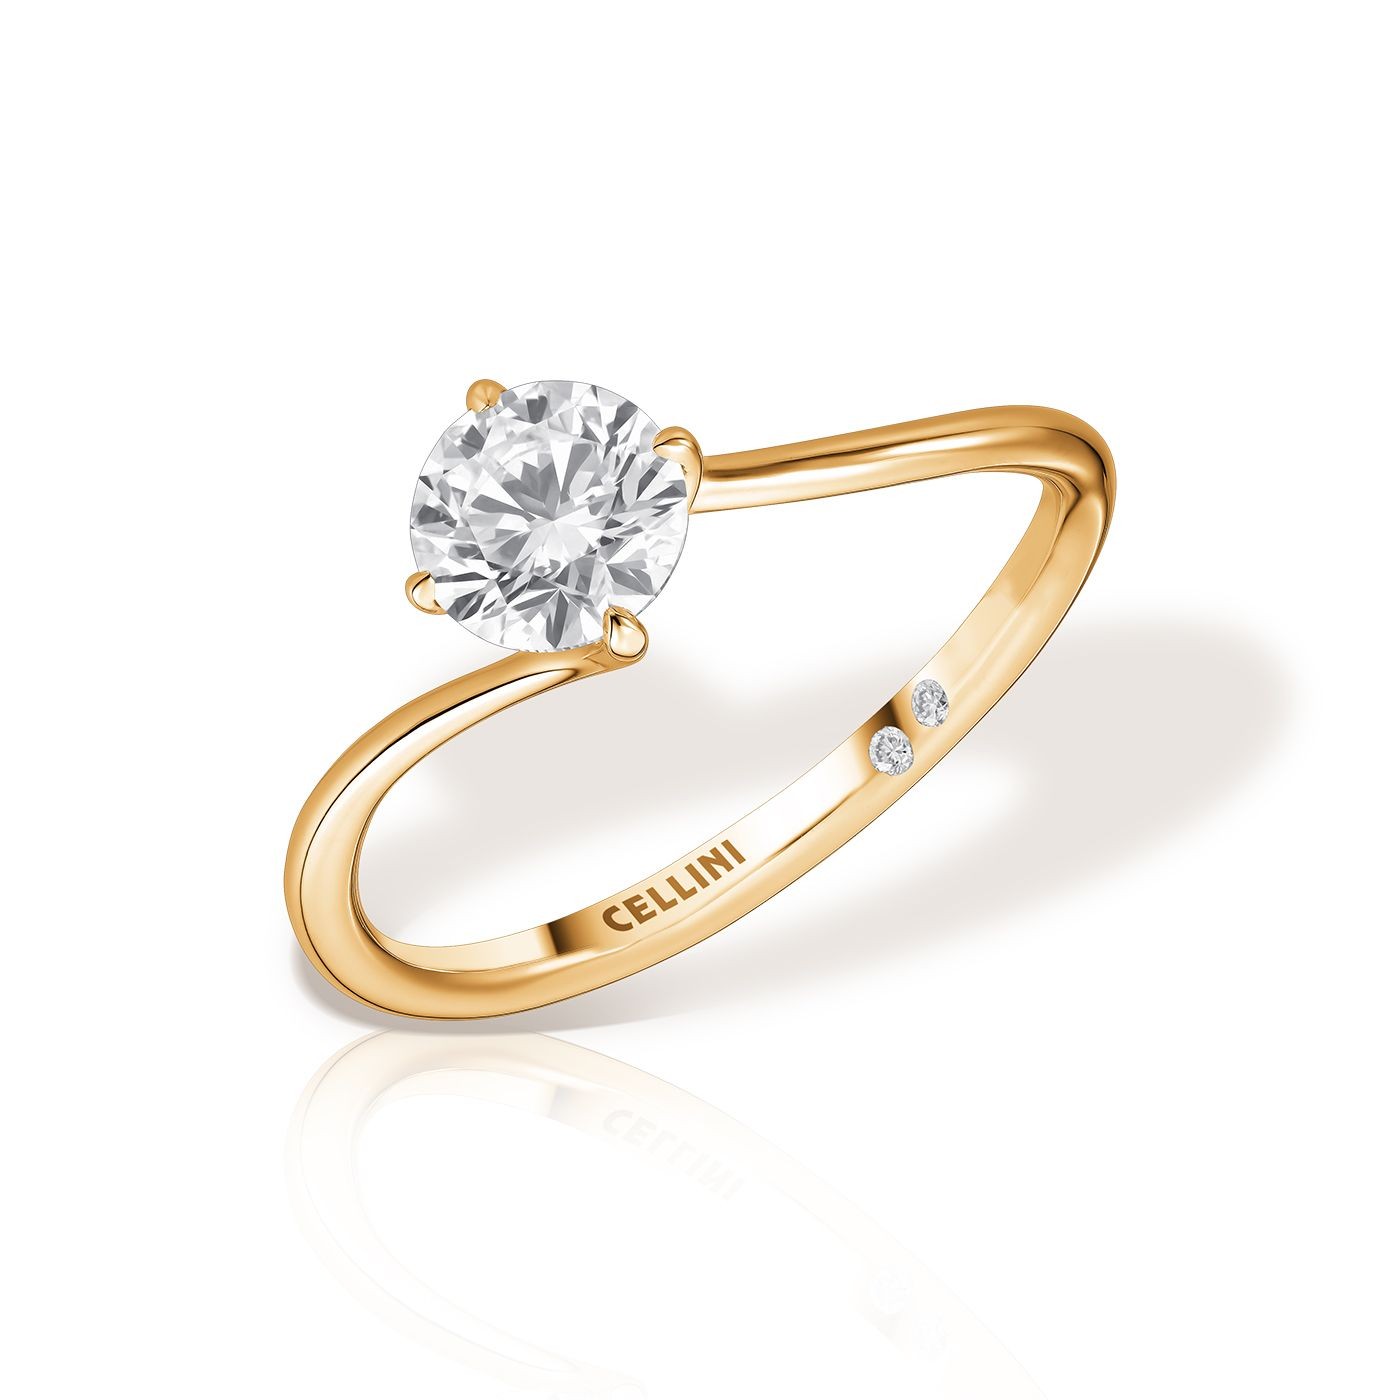 Inel de logodna FOREVER cu diamante de 0.21 carate, aur galben de 18K